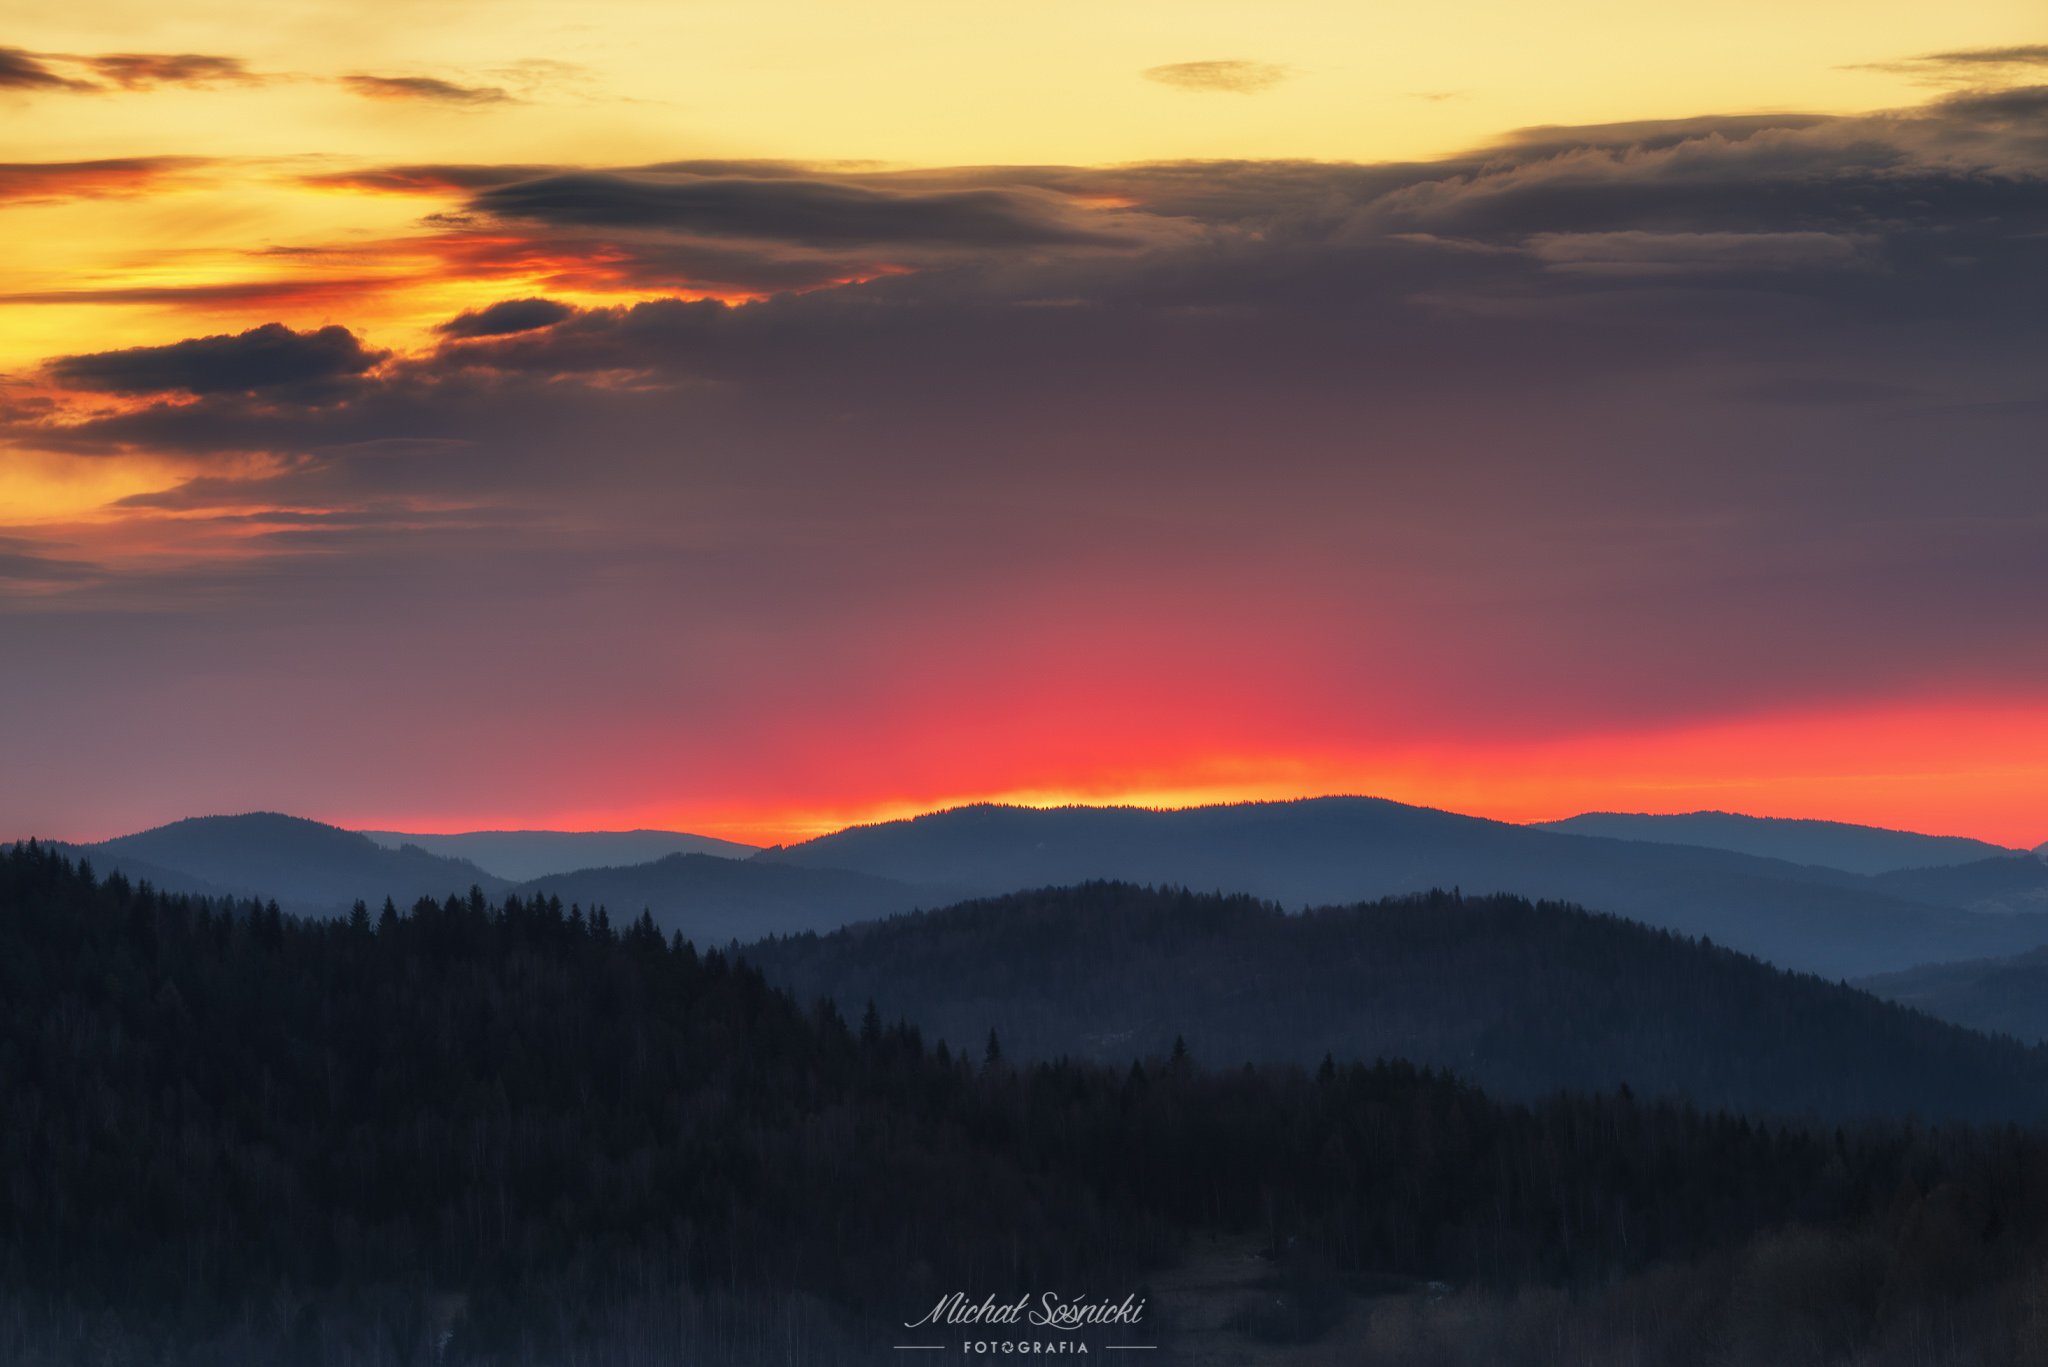 #today #sun #sunrise #poland #zawoja #best #sky #clouds #nature, Michał Sośnicki